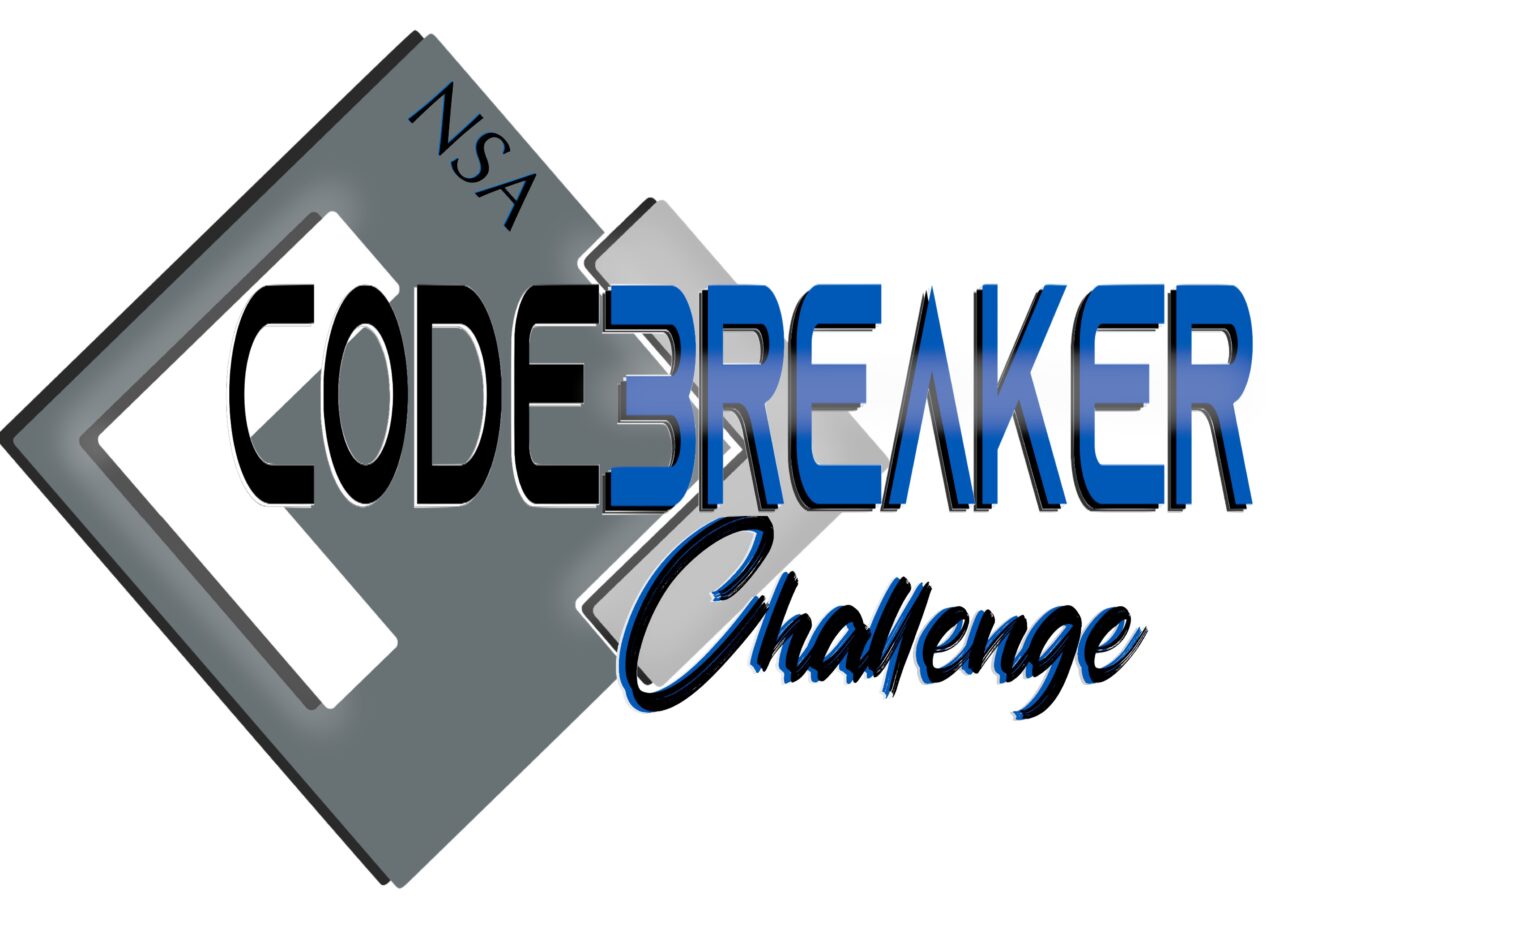 NSA Codebreaker Challenge logo